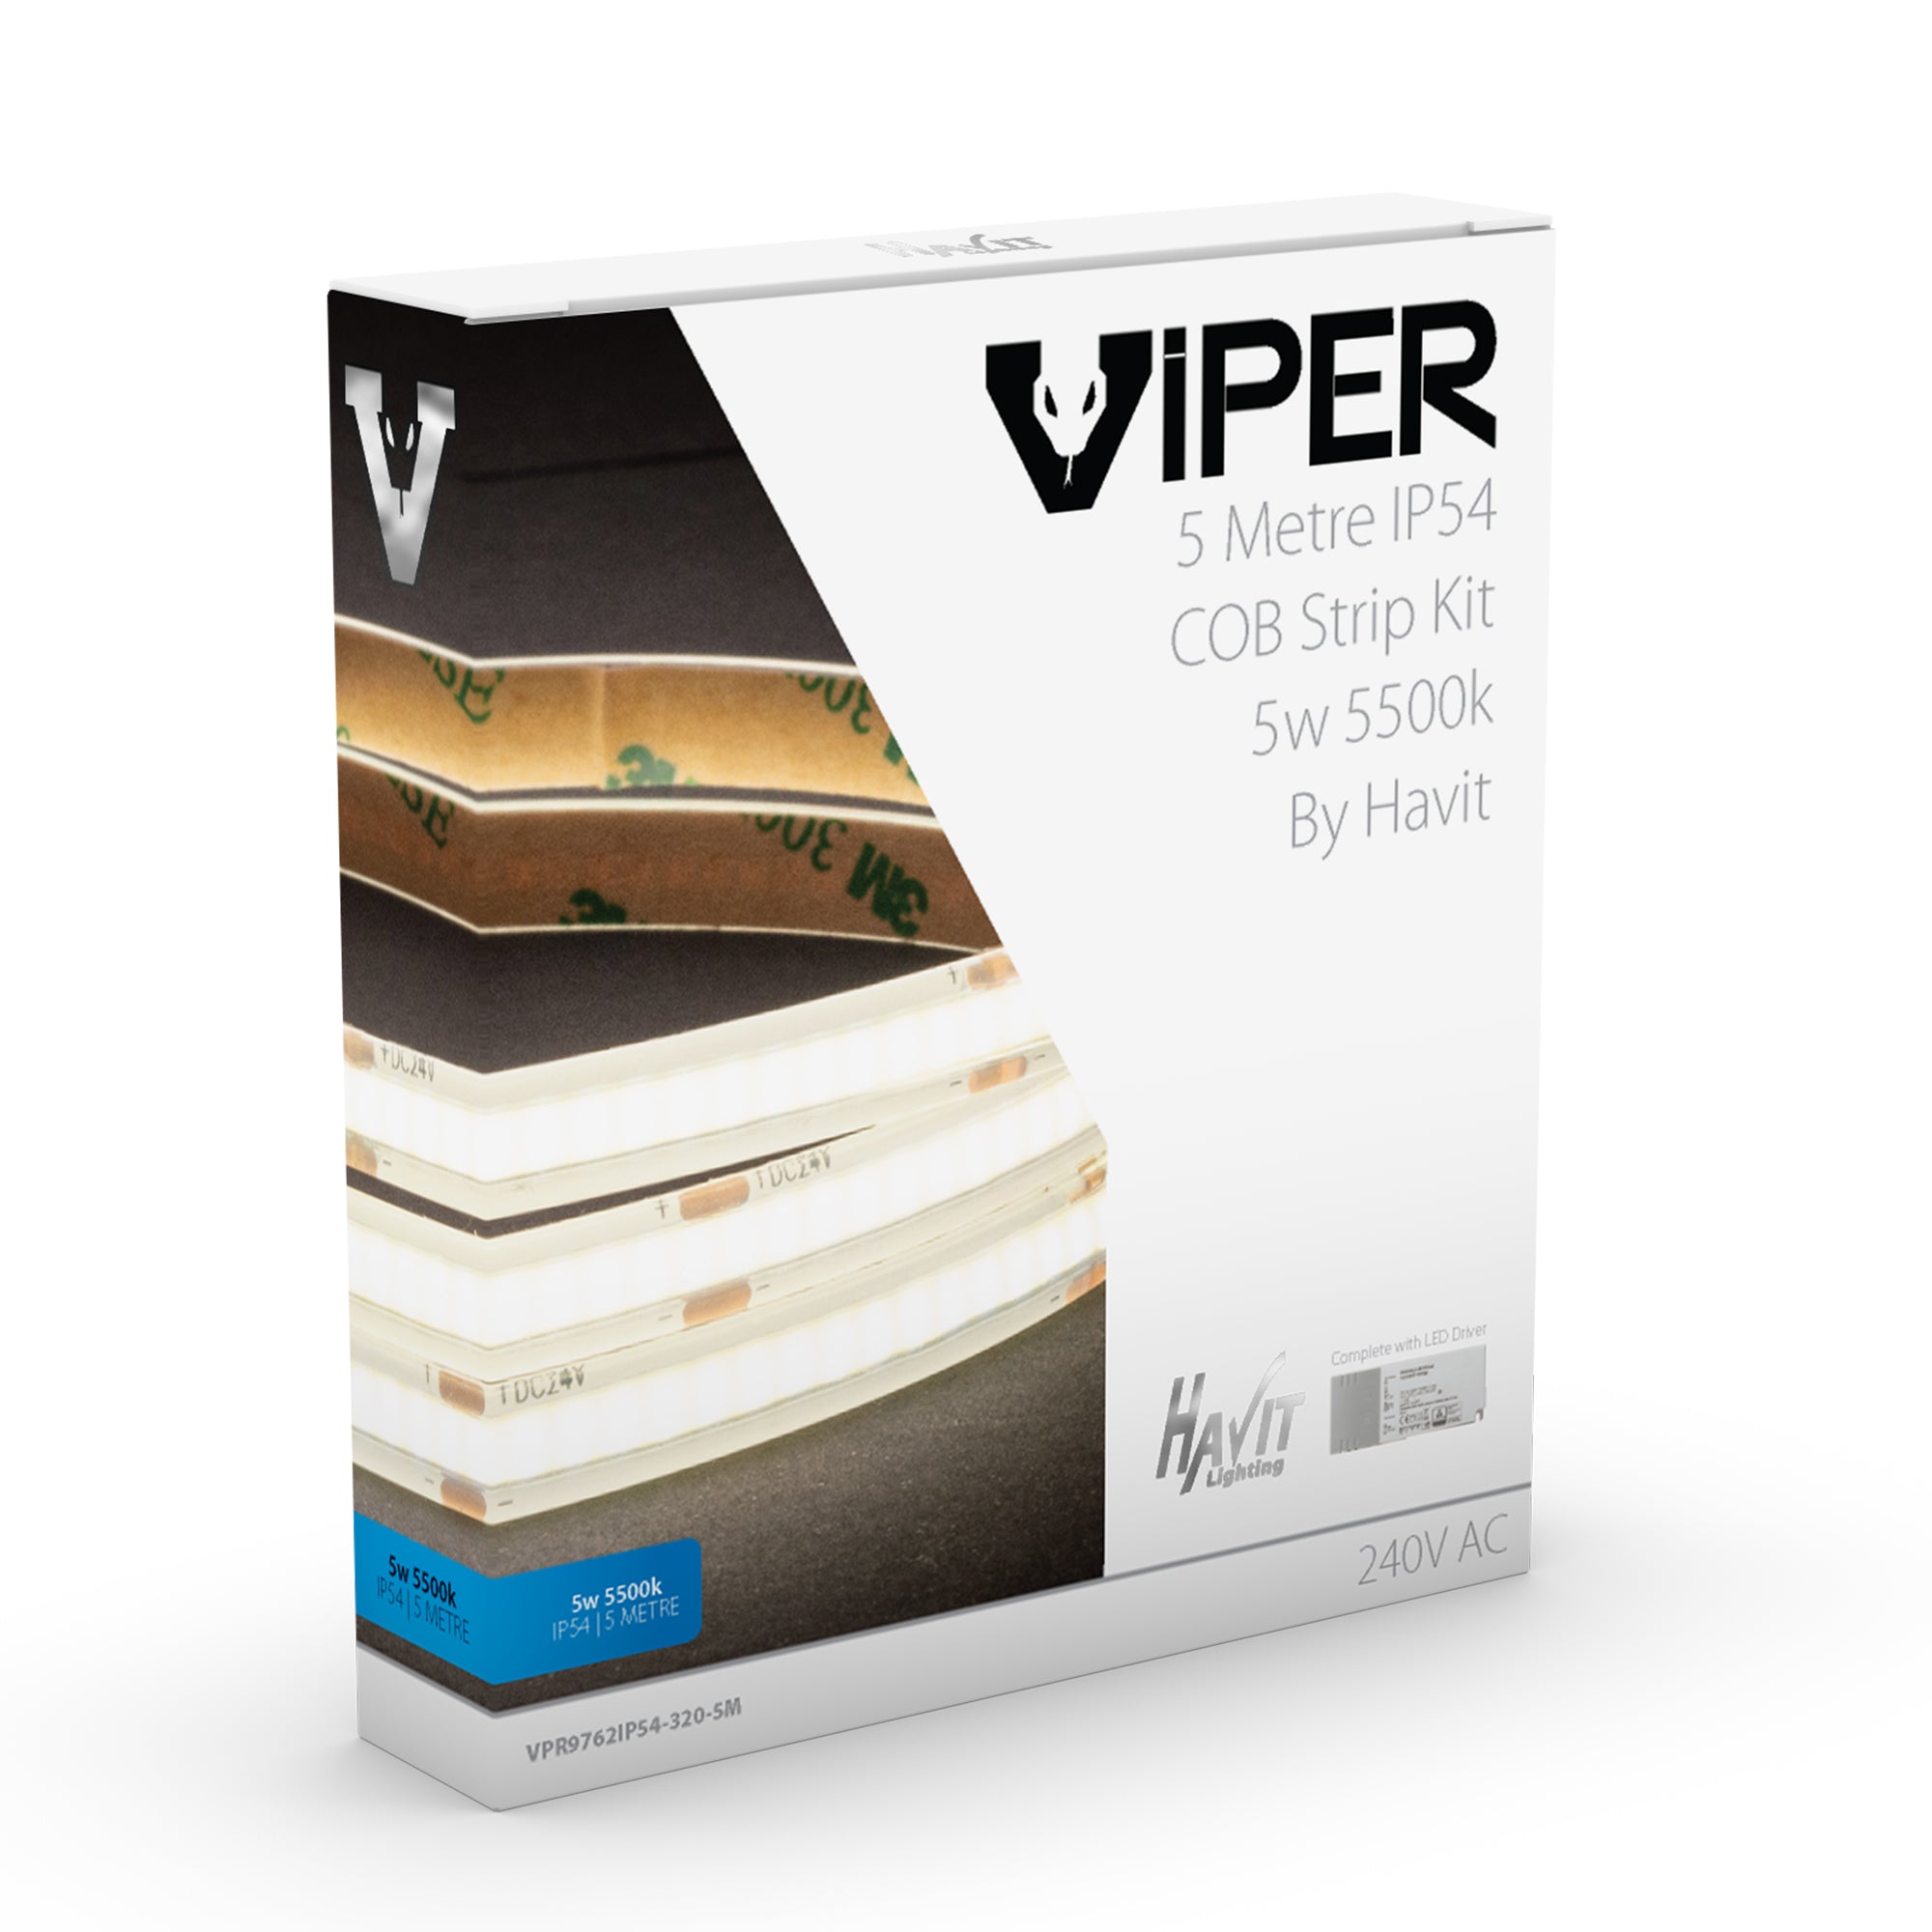 VPR9762IP54-320-5M - Viper COB 5w Per Metre 5m LED Strip kit 5500k